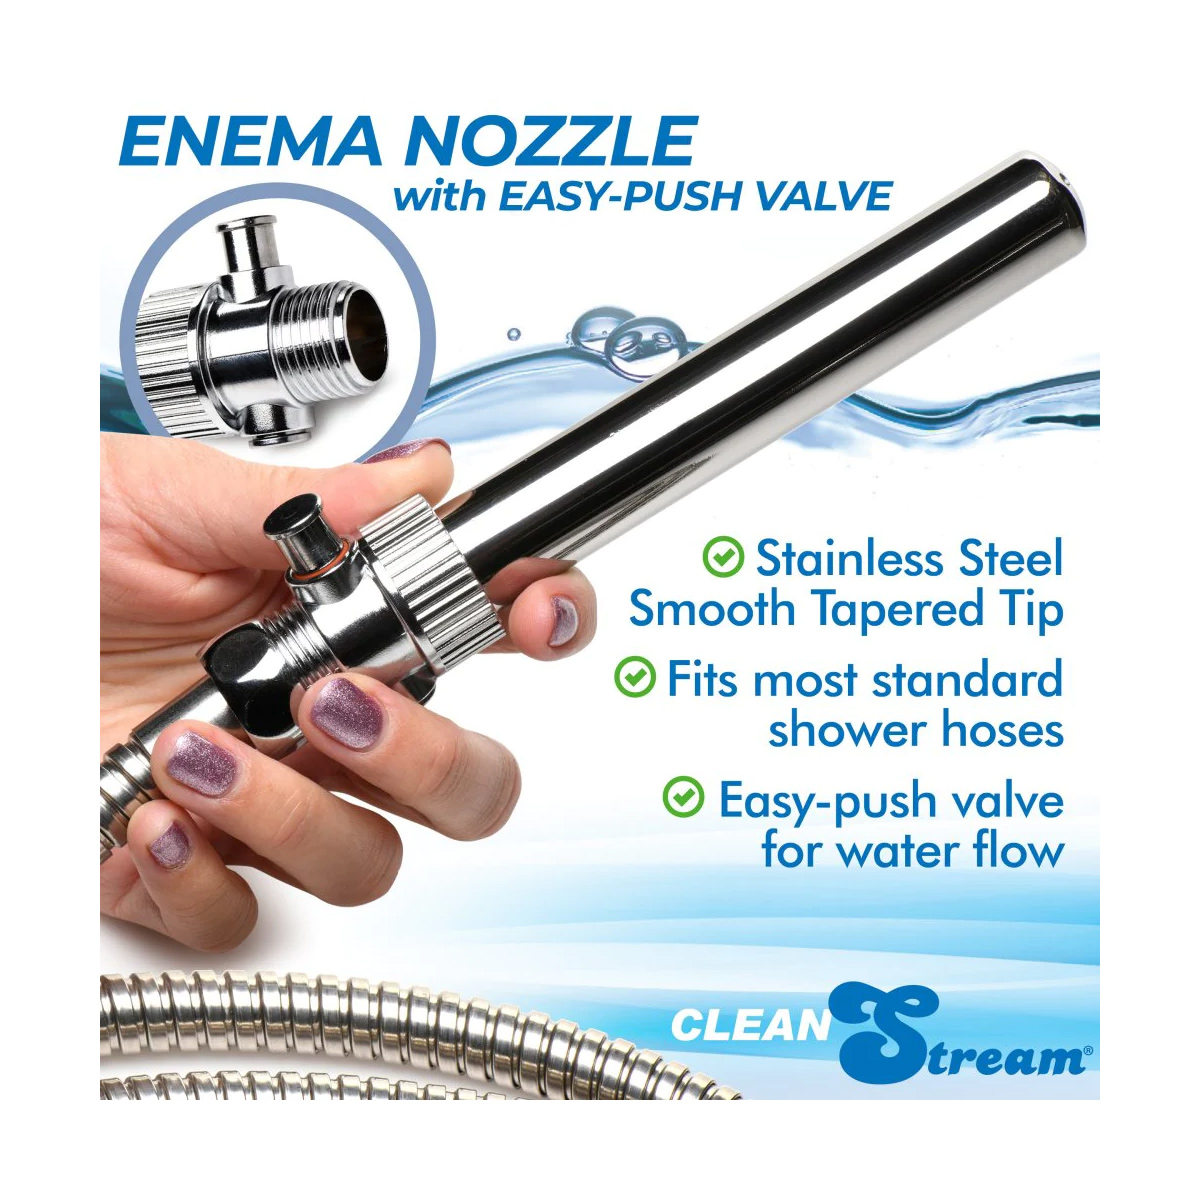 Enema-Nozzle-with-Quick-Shut-OffOn-Valve-OPR-1070051-4